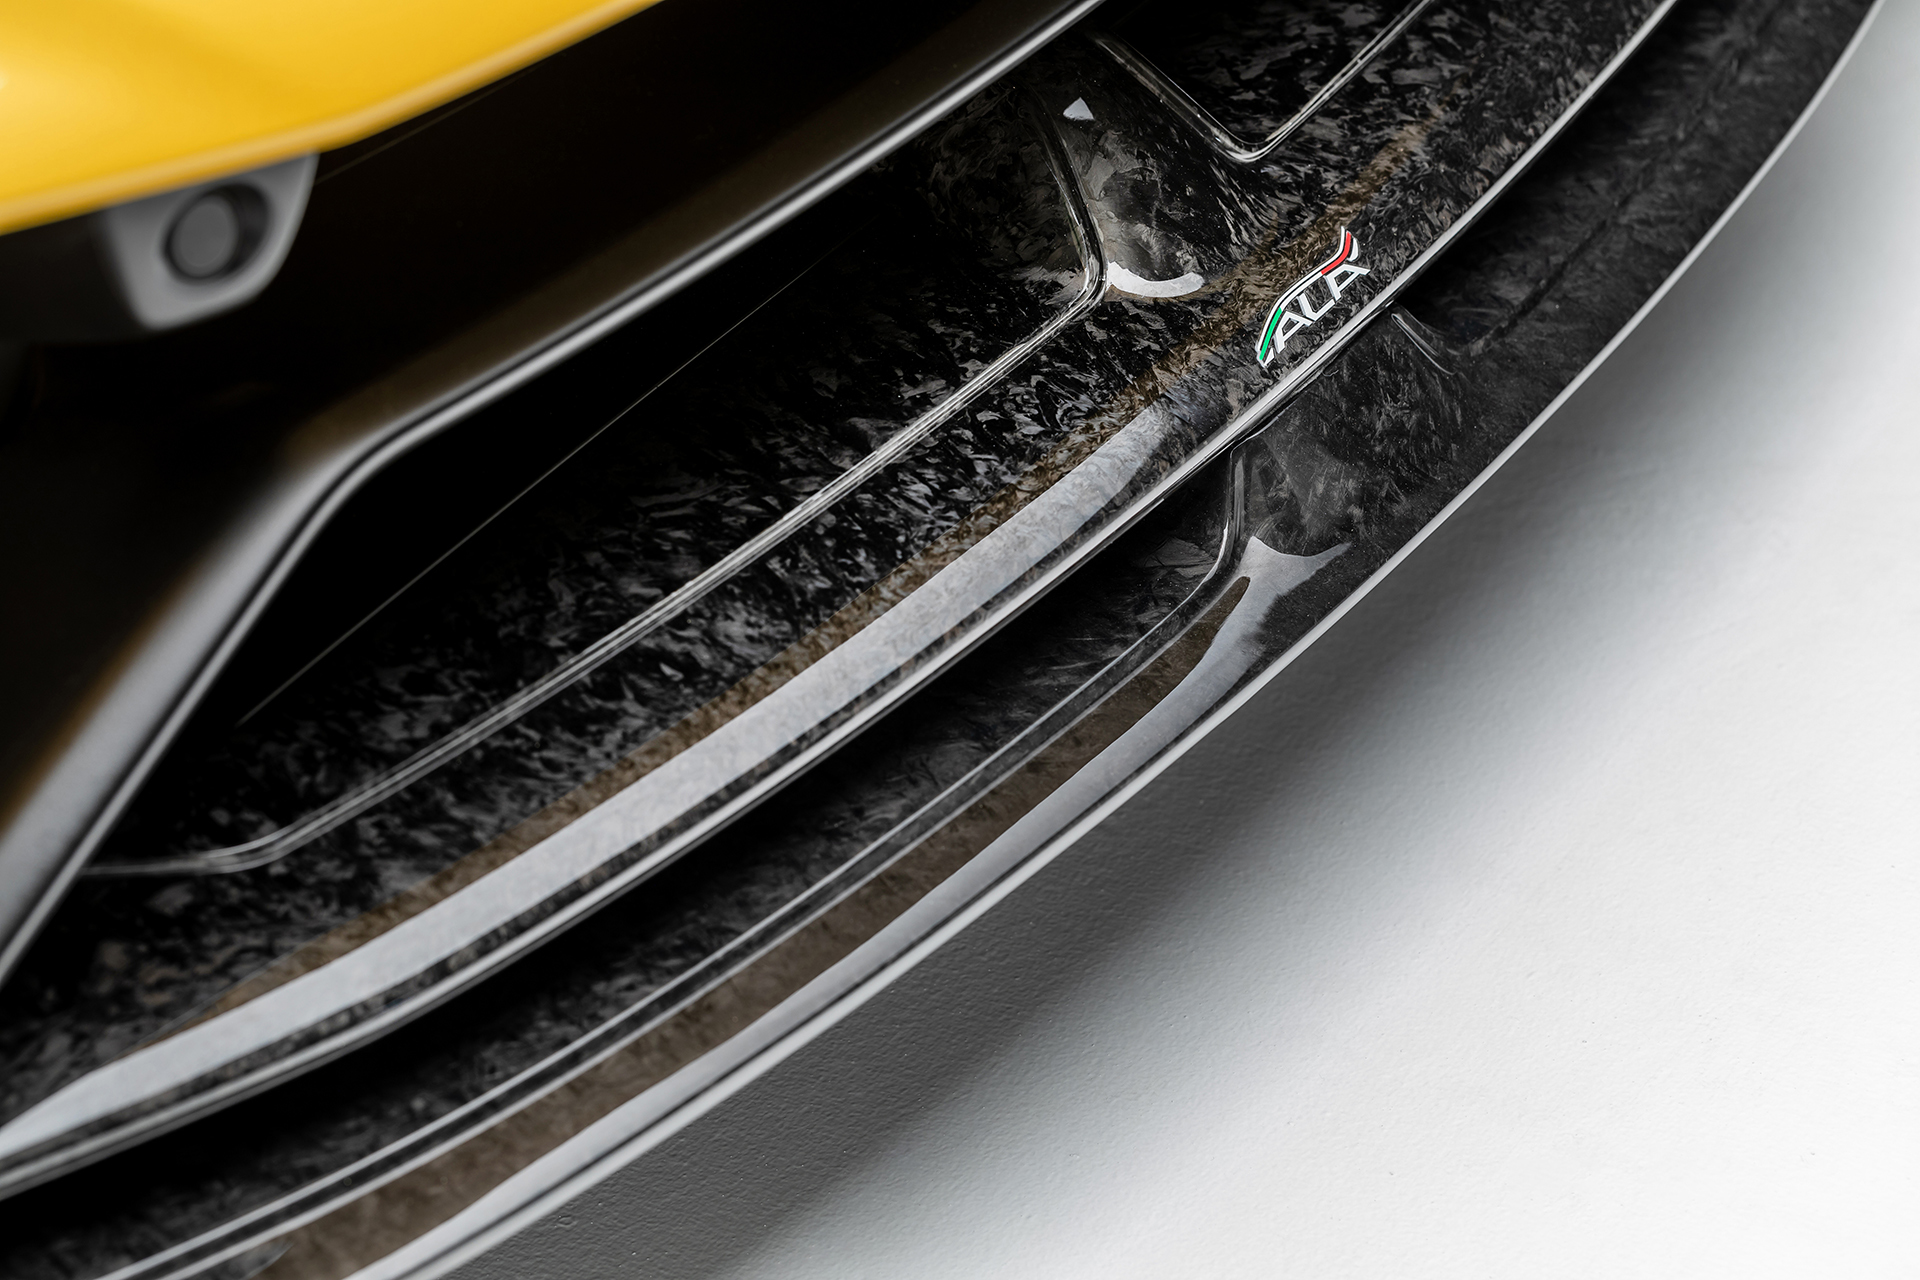 Vorsteiner Nero body kit for Lamborghini Huracan Vincenzo carbon fiber